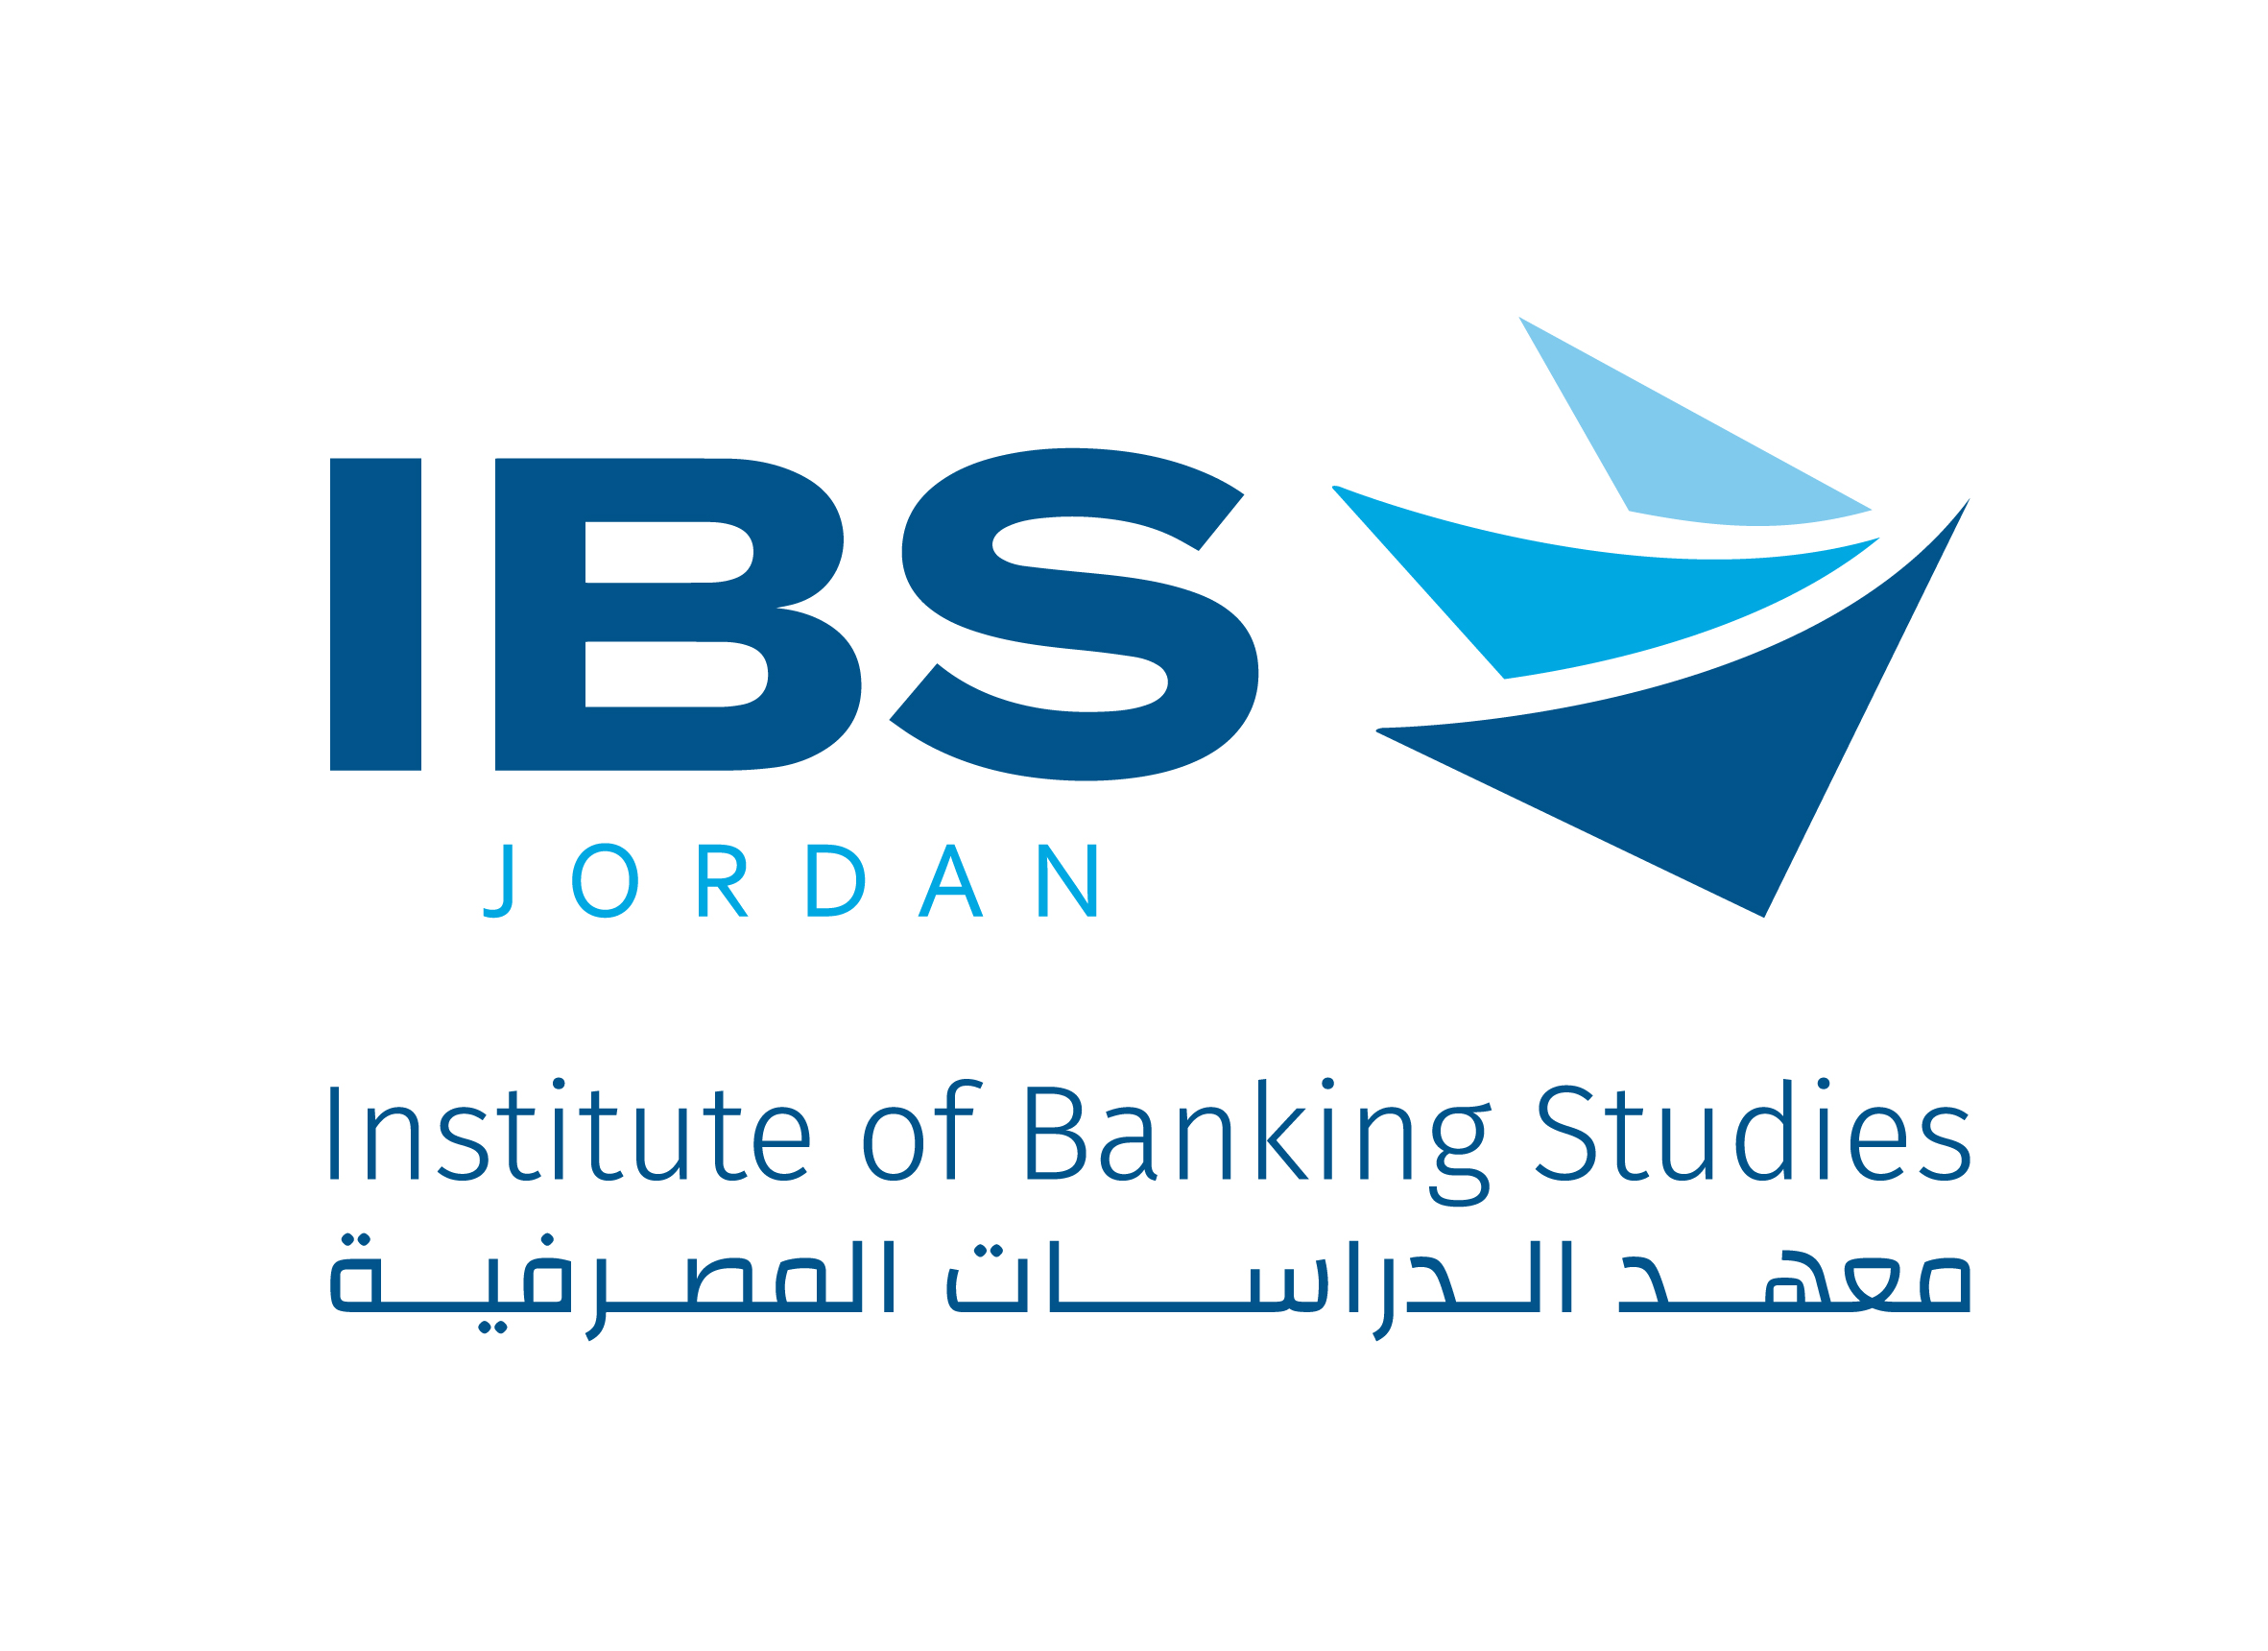  Institute of Banking Studies - Jordan